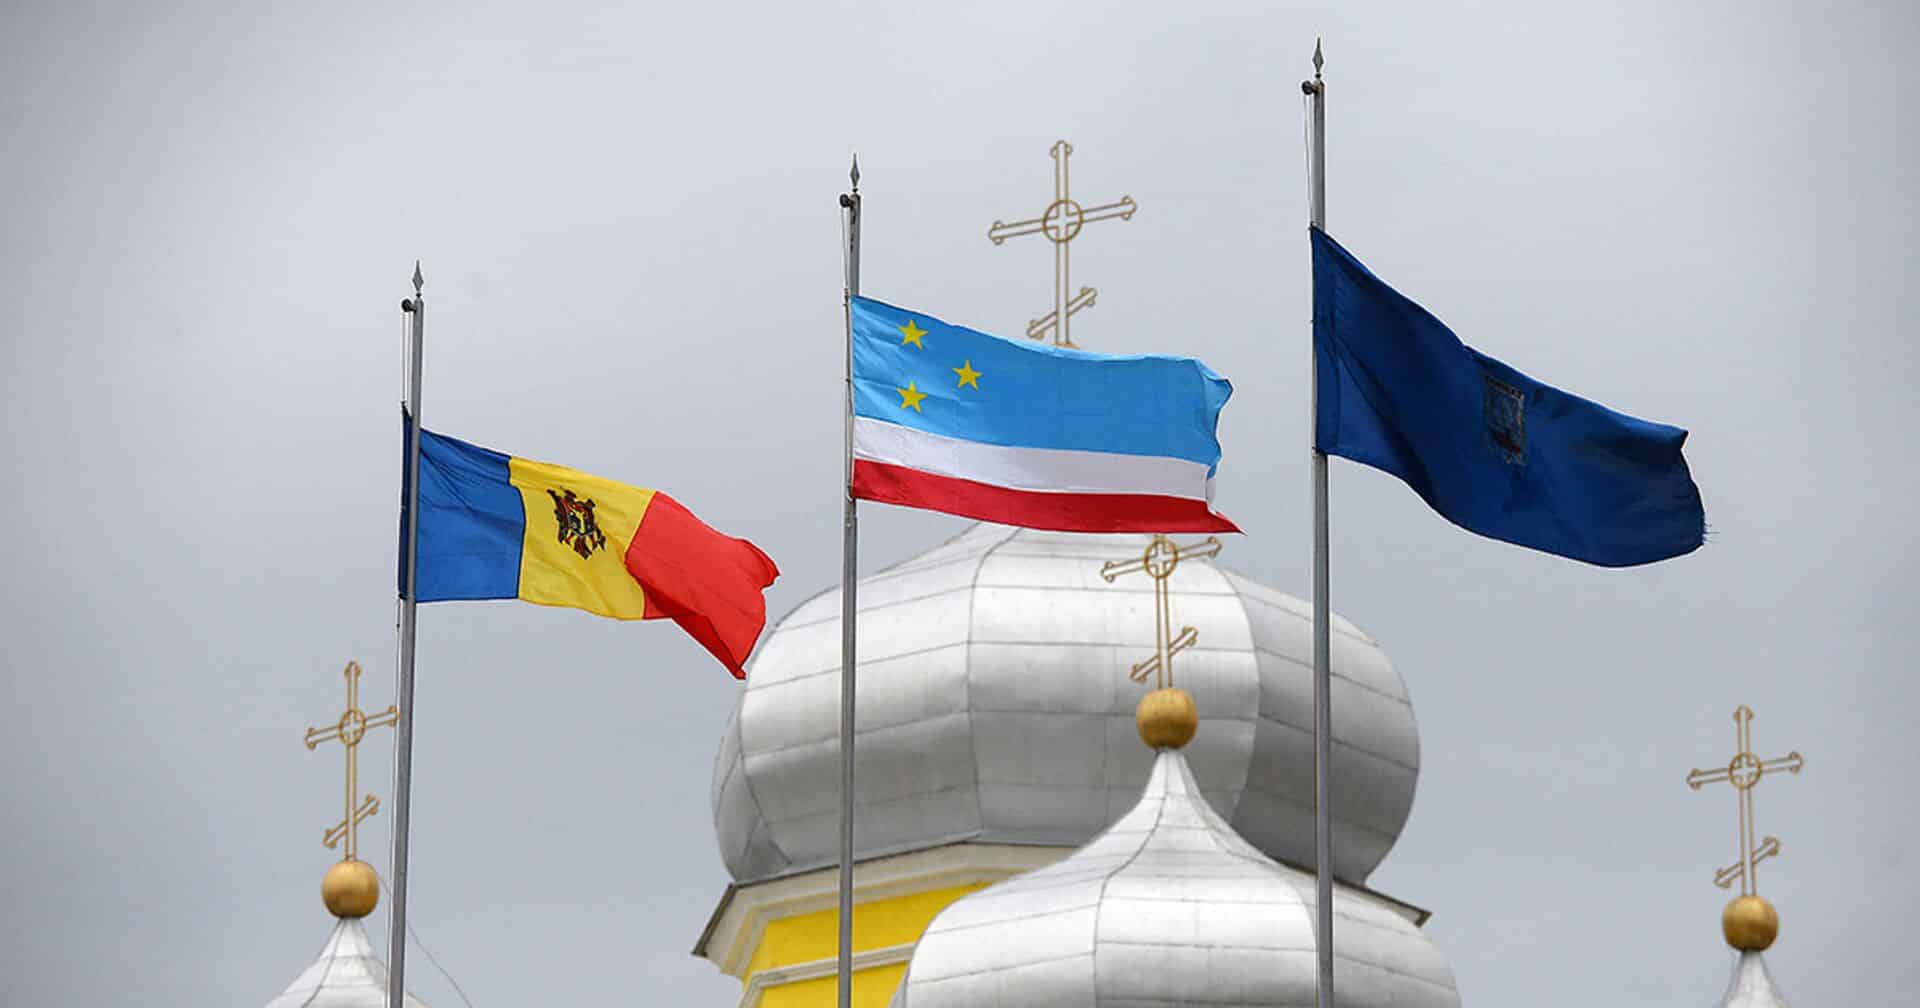 Гагаузия флаг. Флаг Молдавии и Гагаузии. Гагаузия и Молдова флаги. Гагаузская автономия. Флаг АТО Гагаузия.